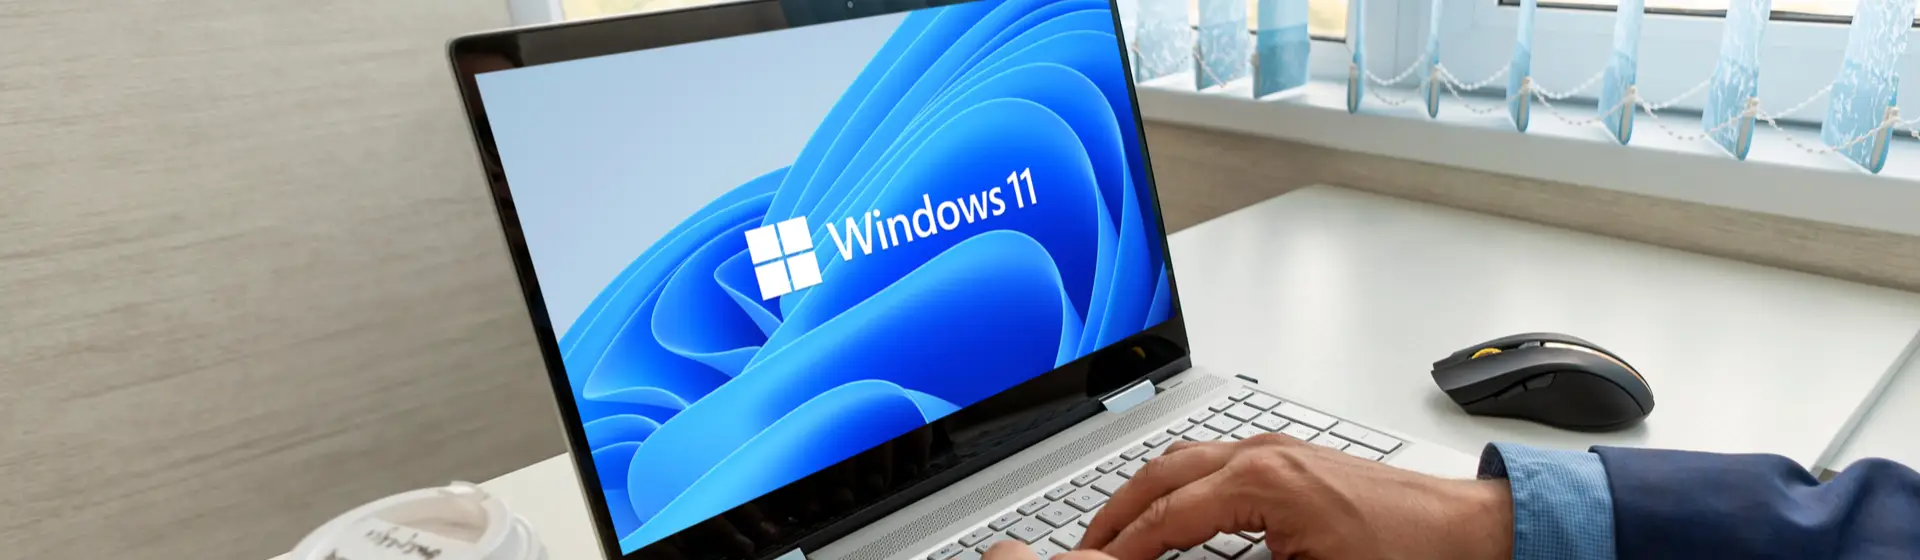 Requisitos Windows 11: saiba se seu PC consegue rodar o sistema